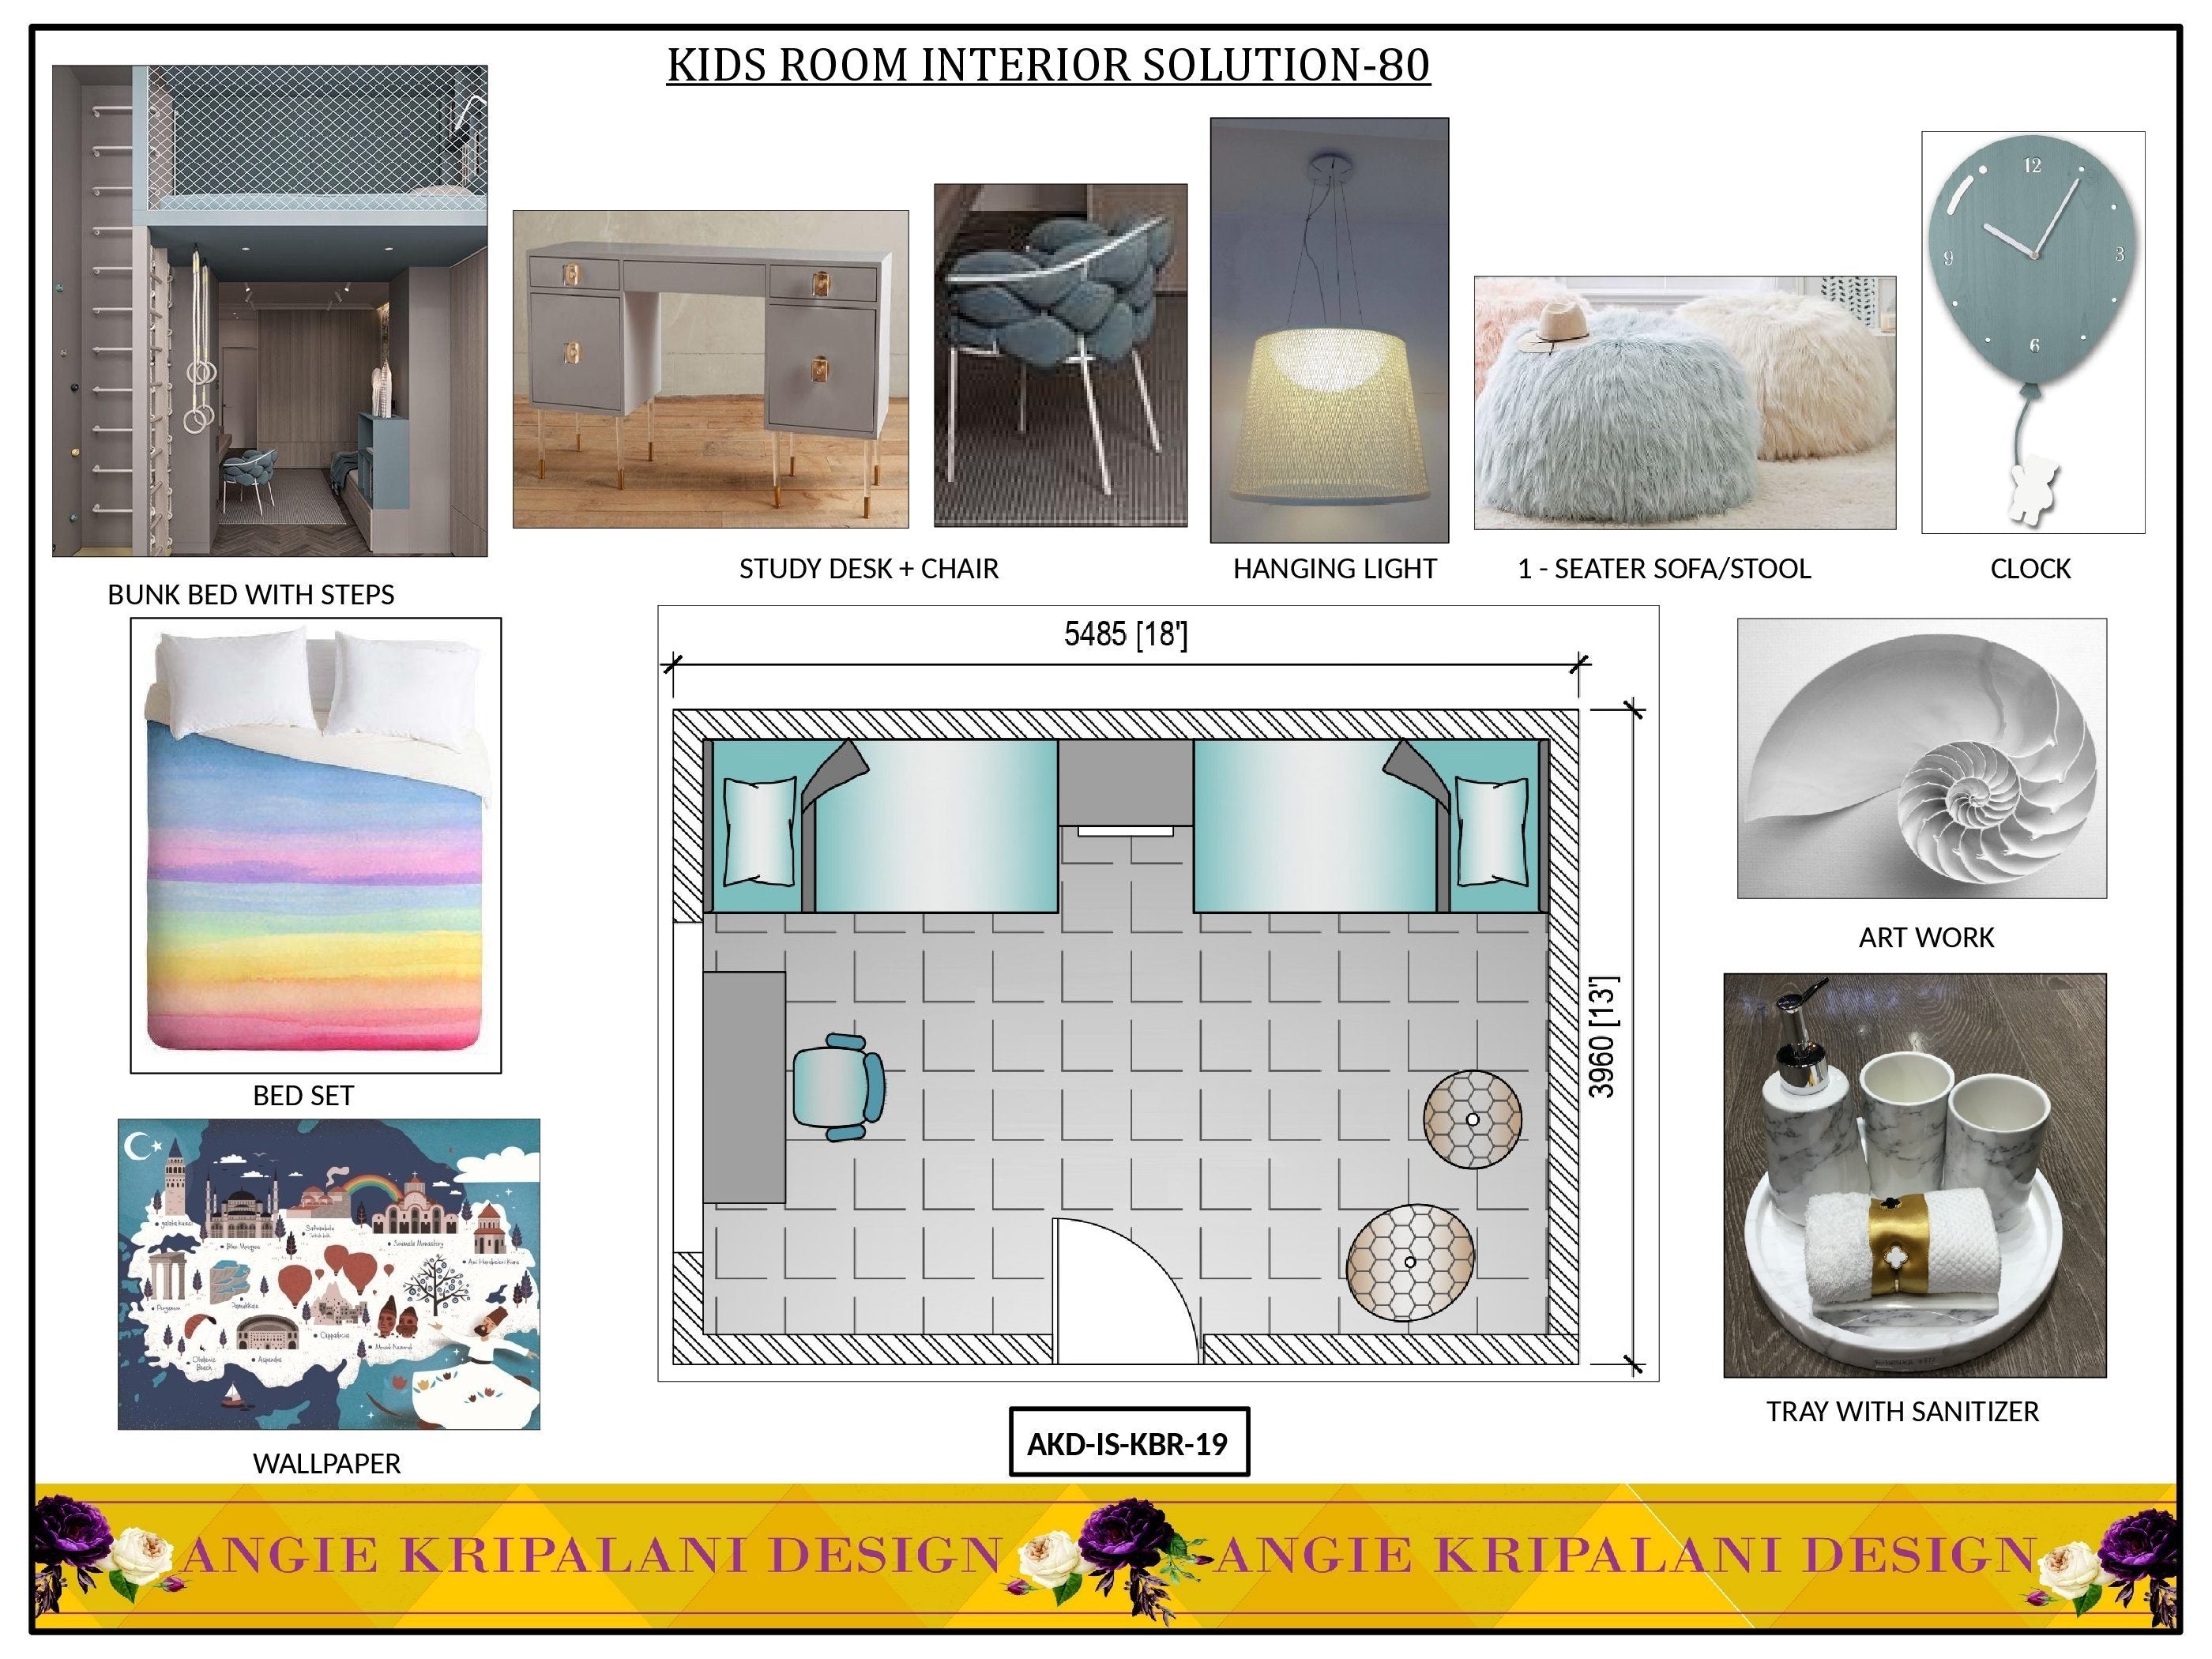 Luxury Kids Room Interior Design Solution